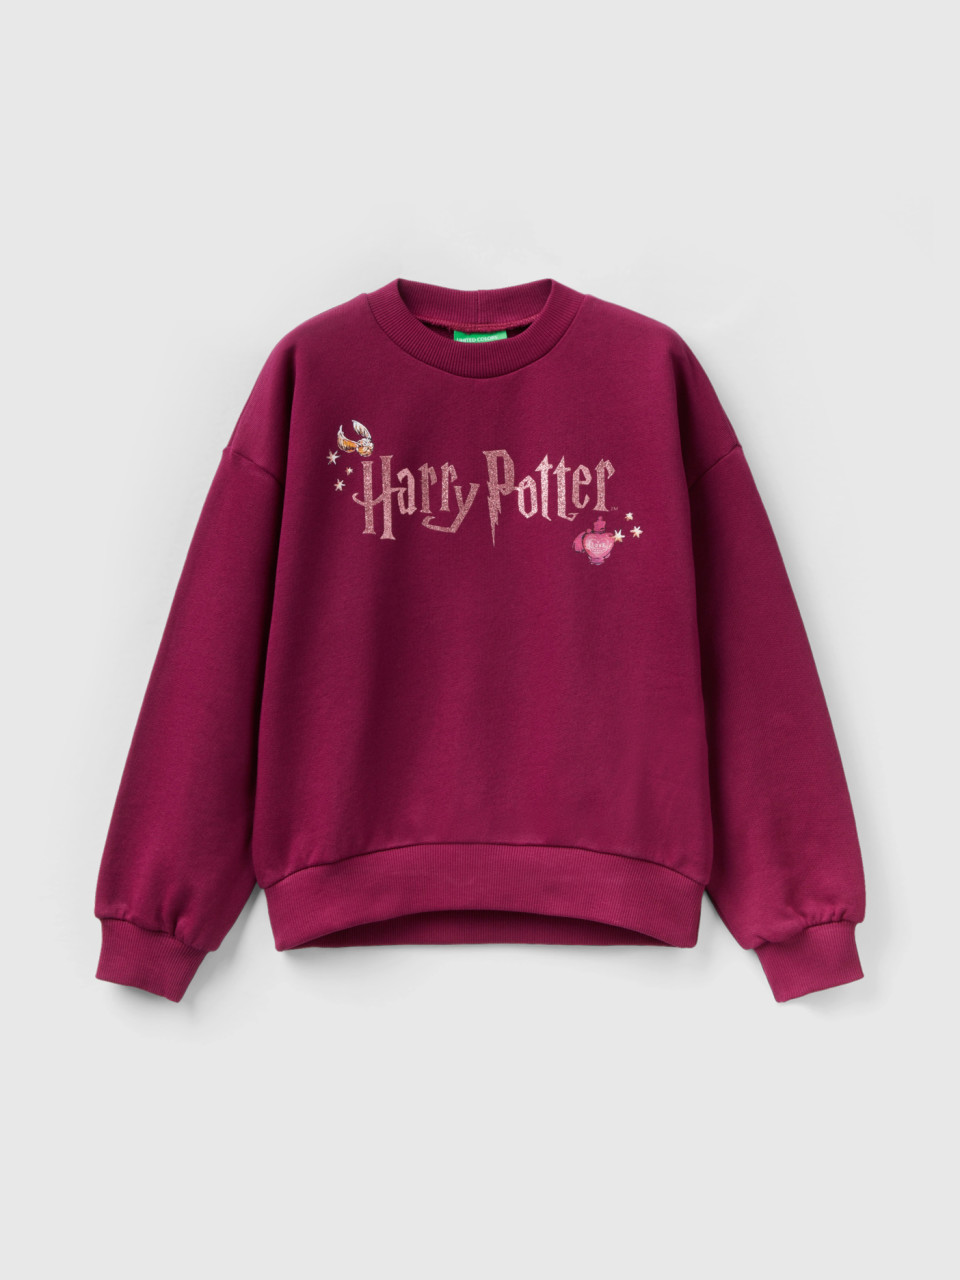 Benetton, Harry Potter Sweatshirt With Glitter, Plum, Kids